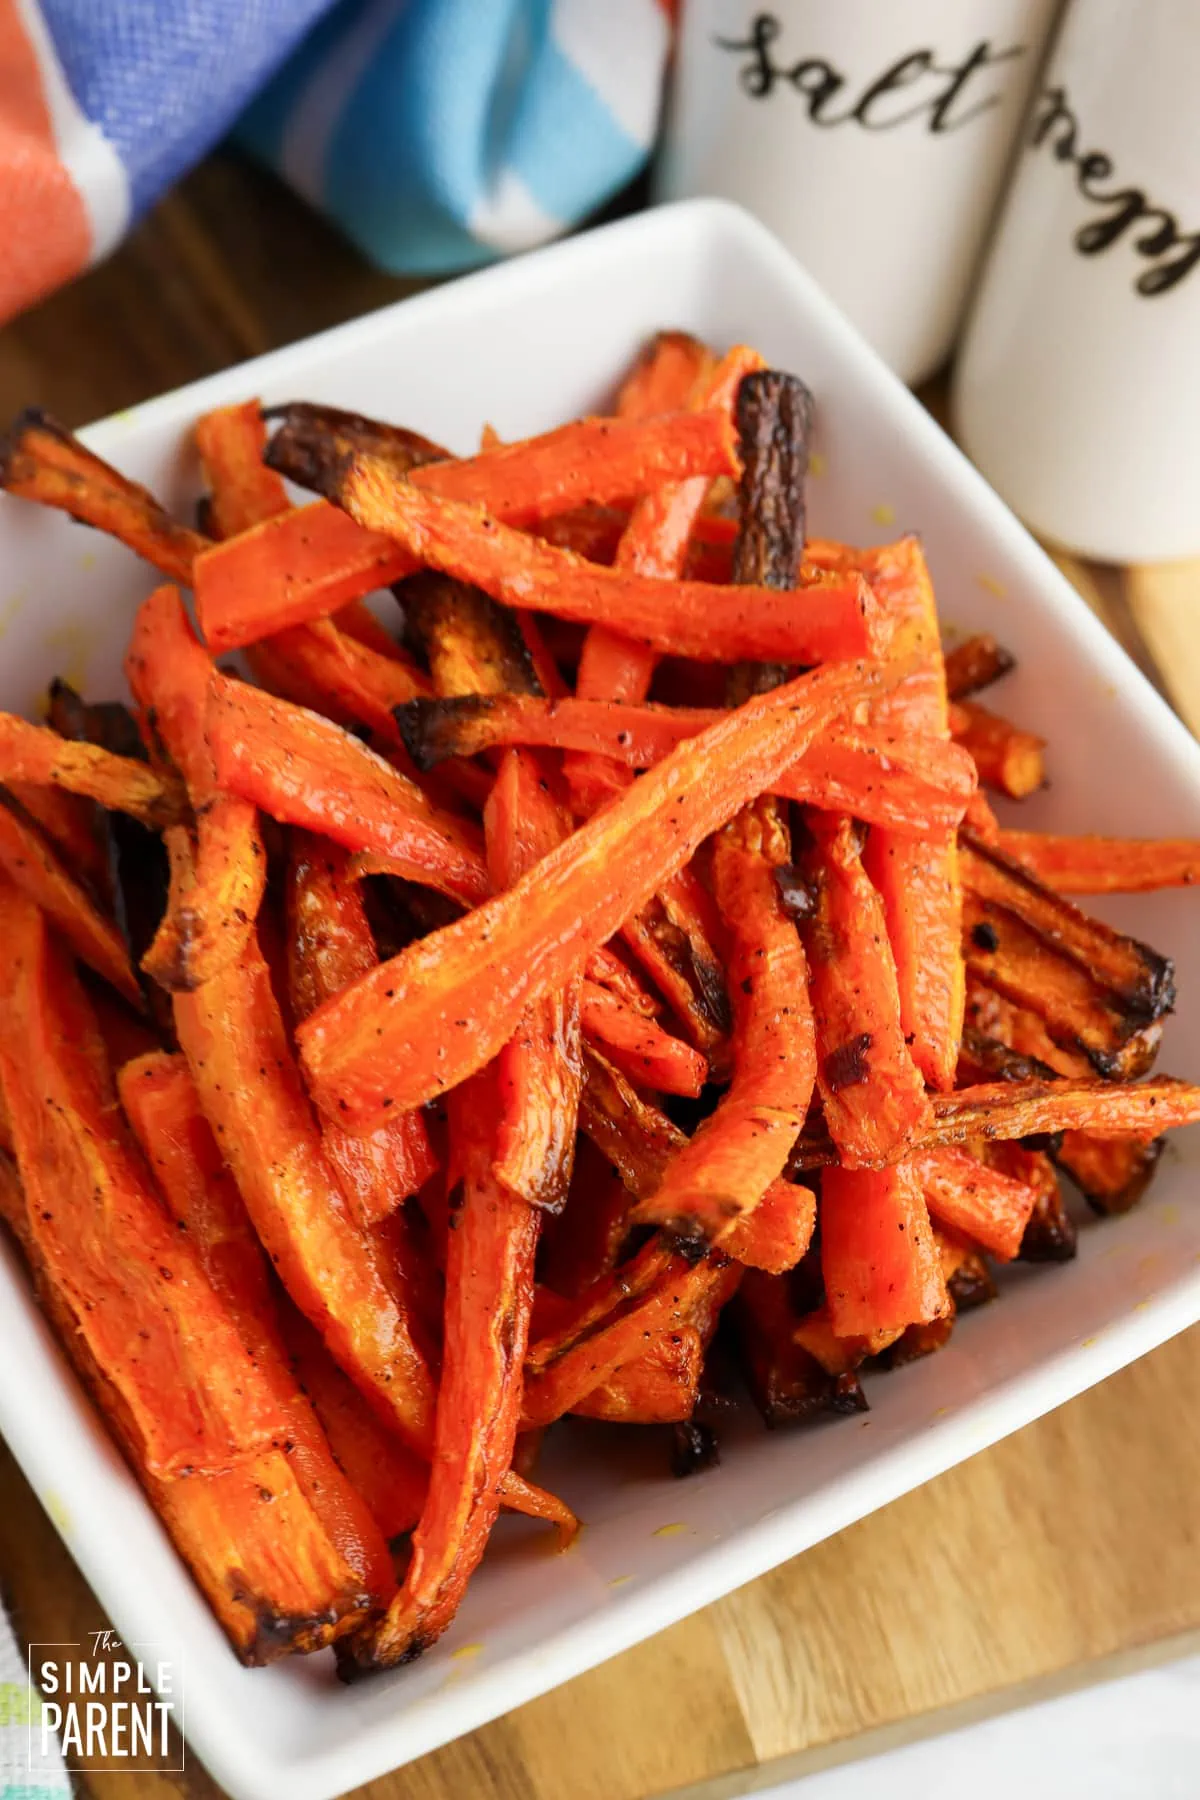 Carrot sticks air fried to make carrot fries